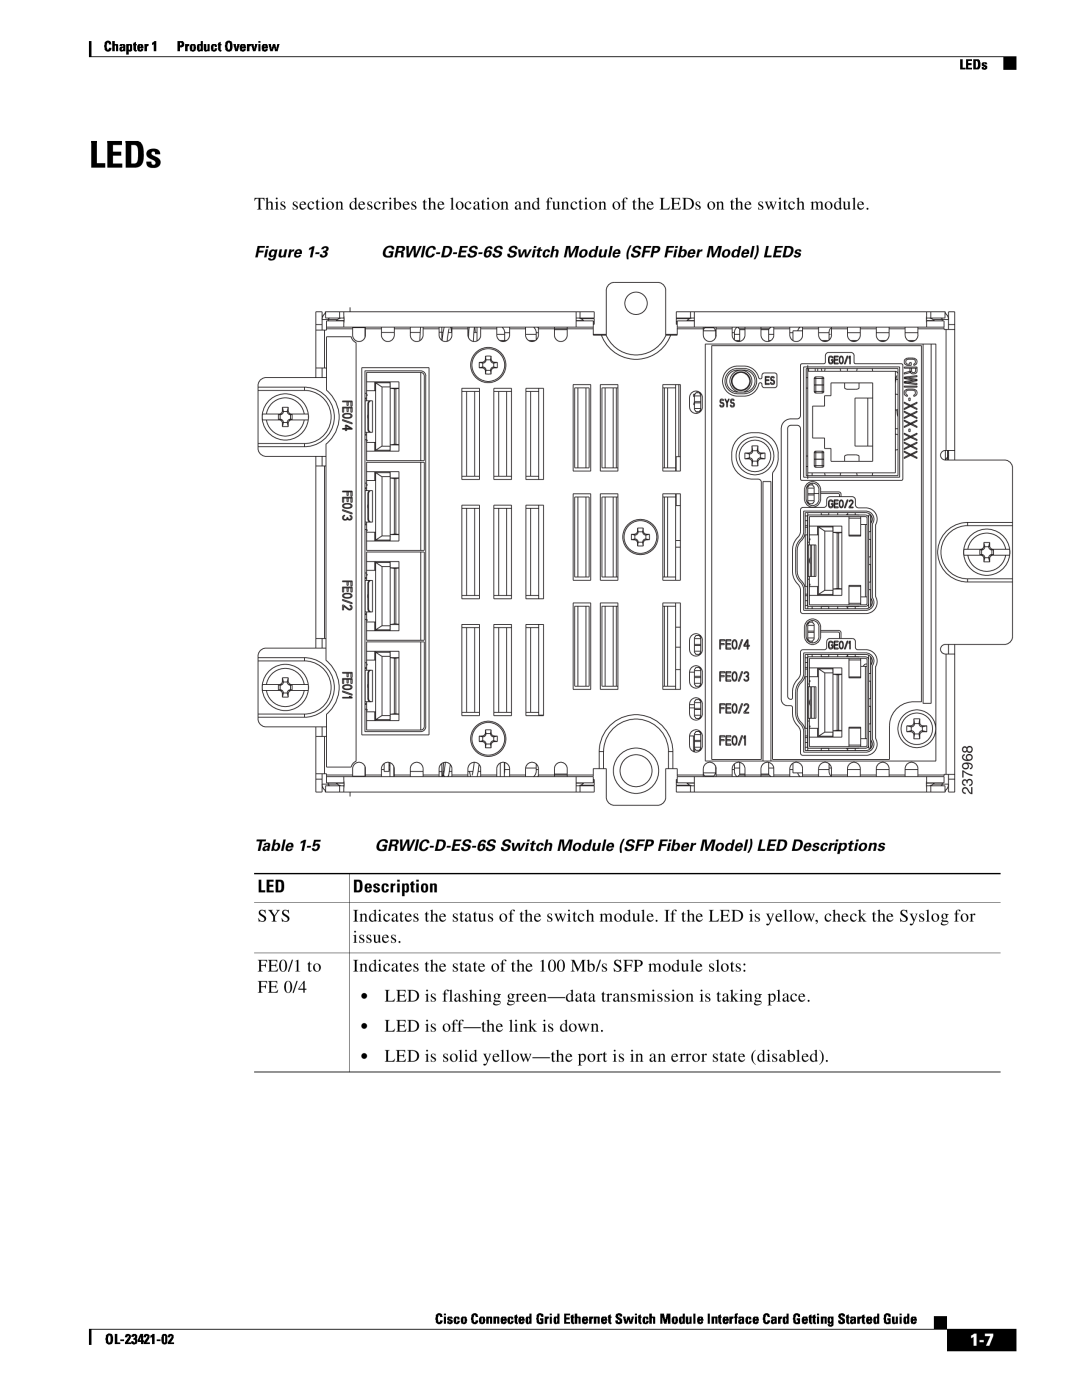 Cisco Systems OL-23421-02 manual LEDs 